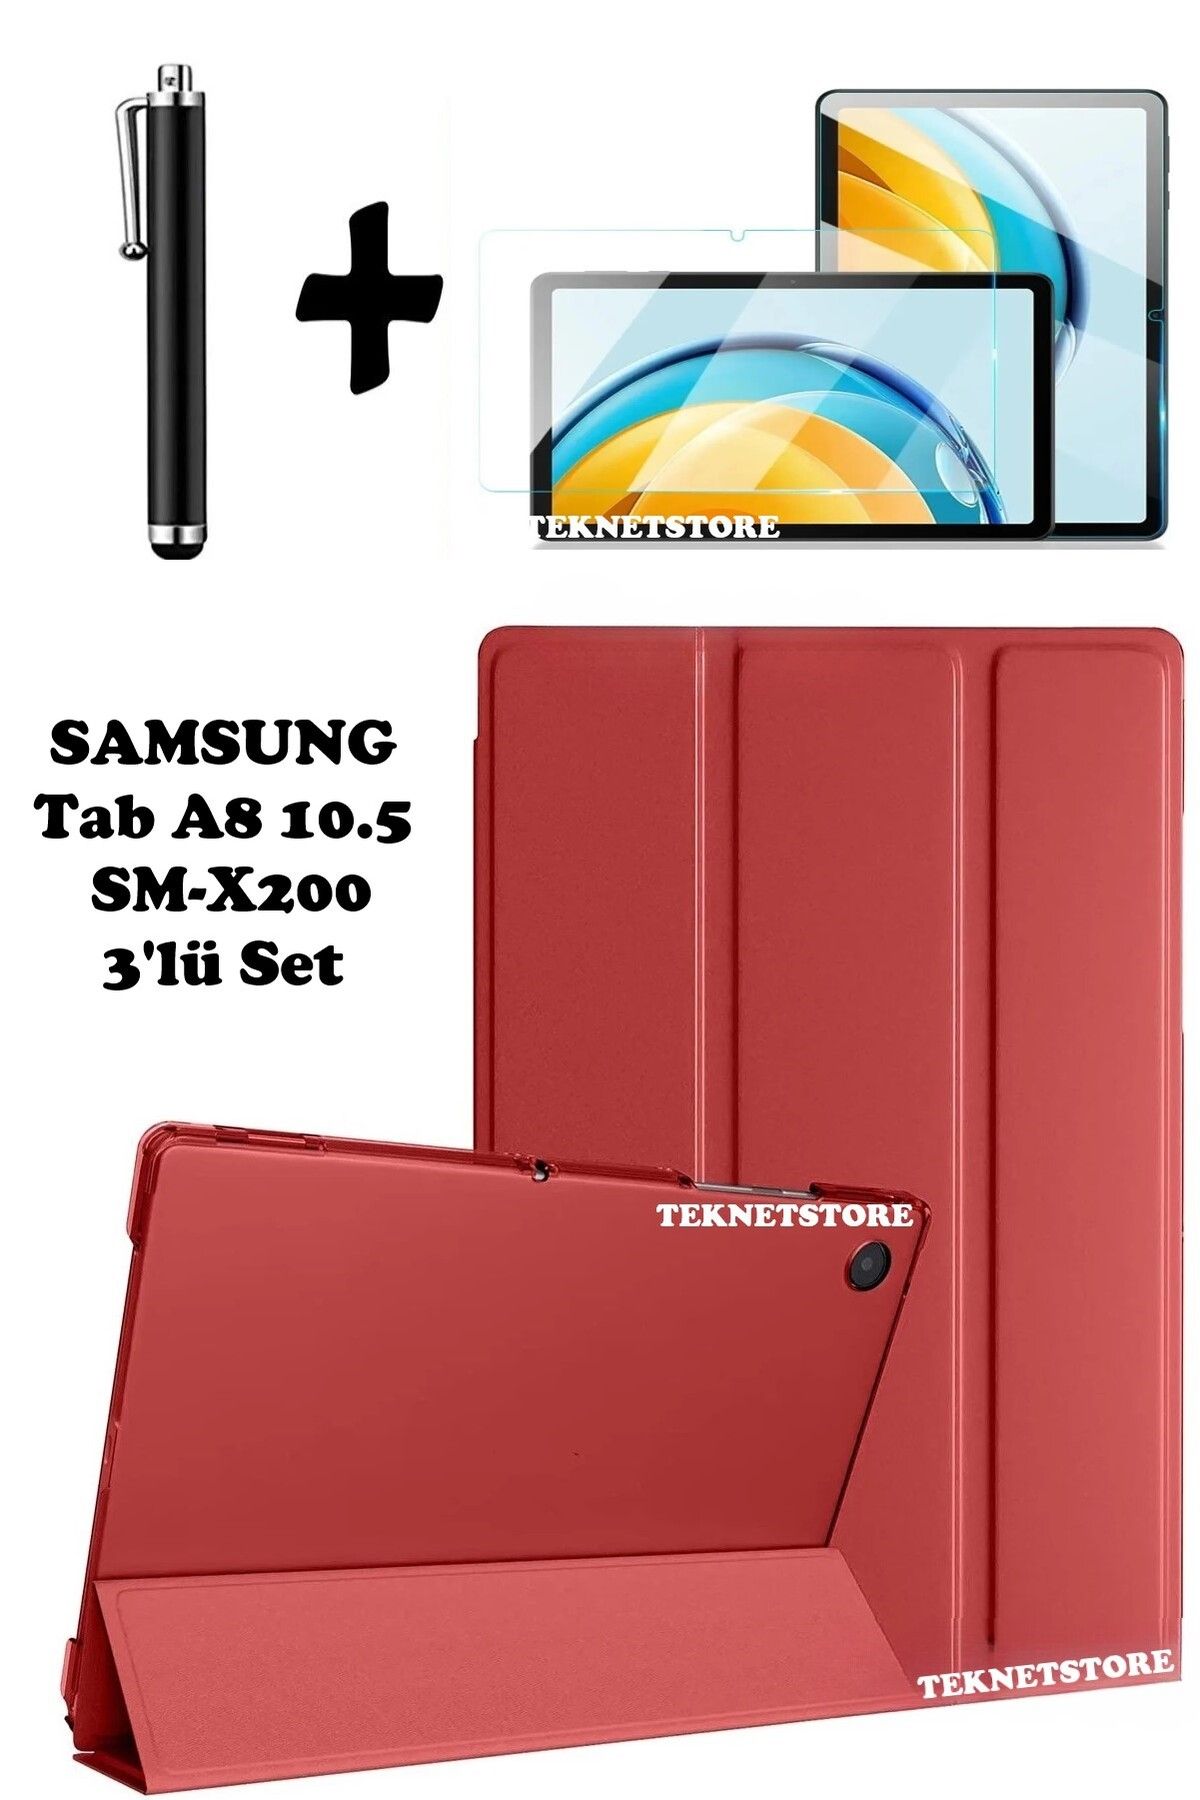 TEKNETSTORE Samsung Galaxy Tab A8 10.5 Inç Sm-x200 Uyumlu Uyku Modlu Tablet Kılıfı Ekran Koruyucu Kalem